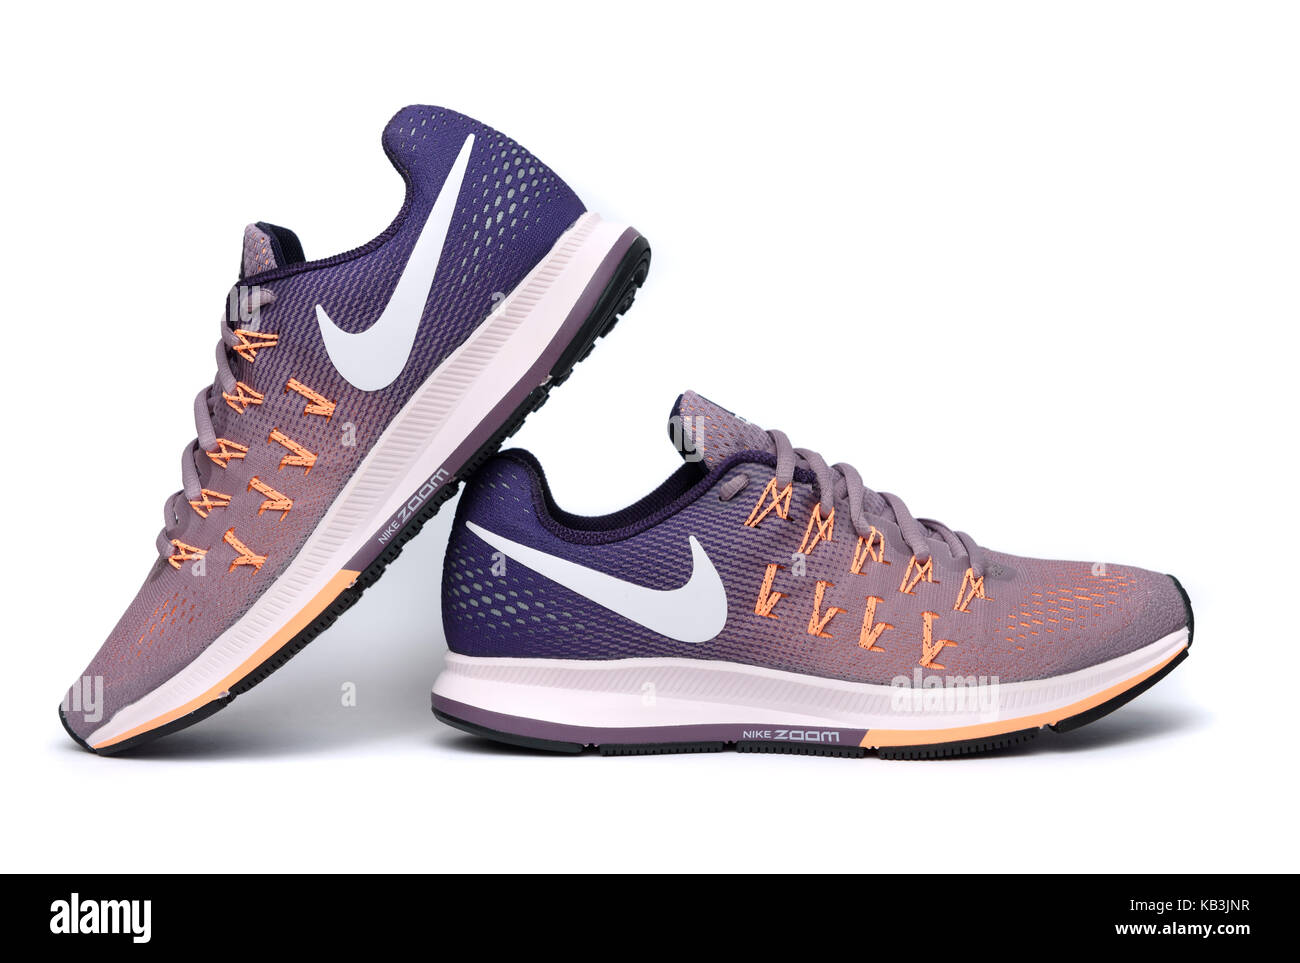 Purple nike zoom 33 shoes and orange Nike Pegasus 33 running shoes isolated on white